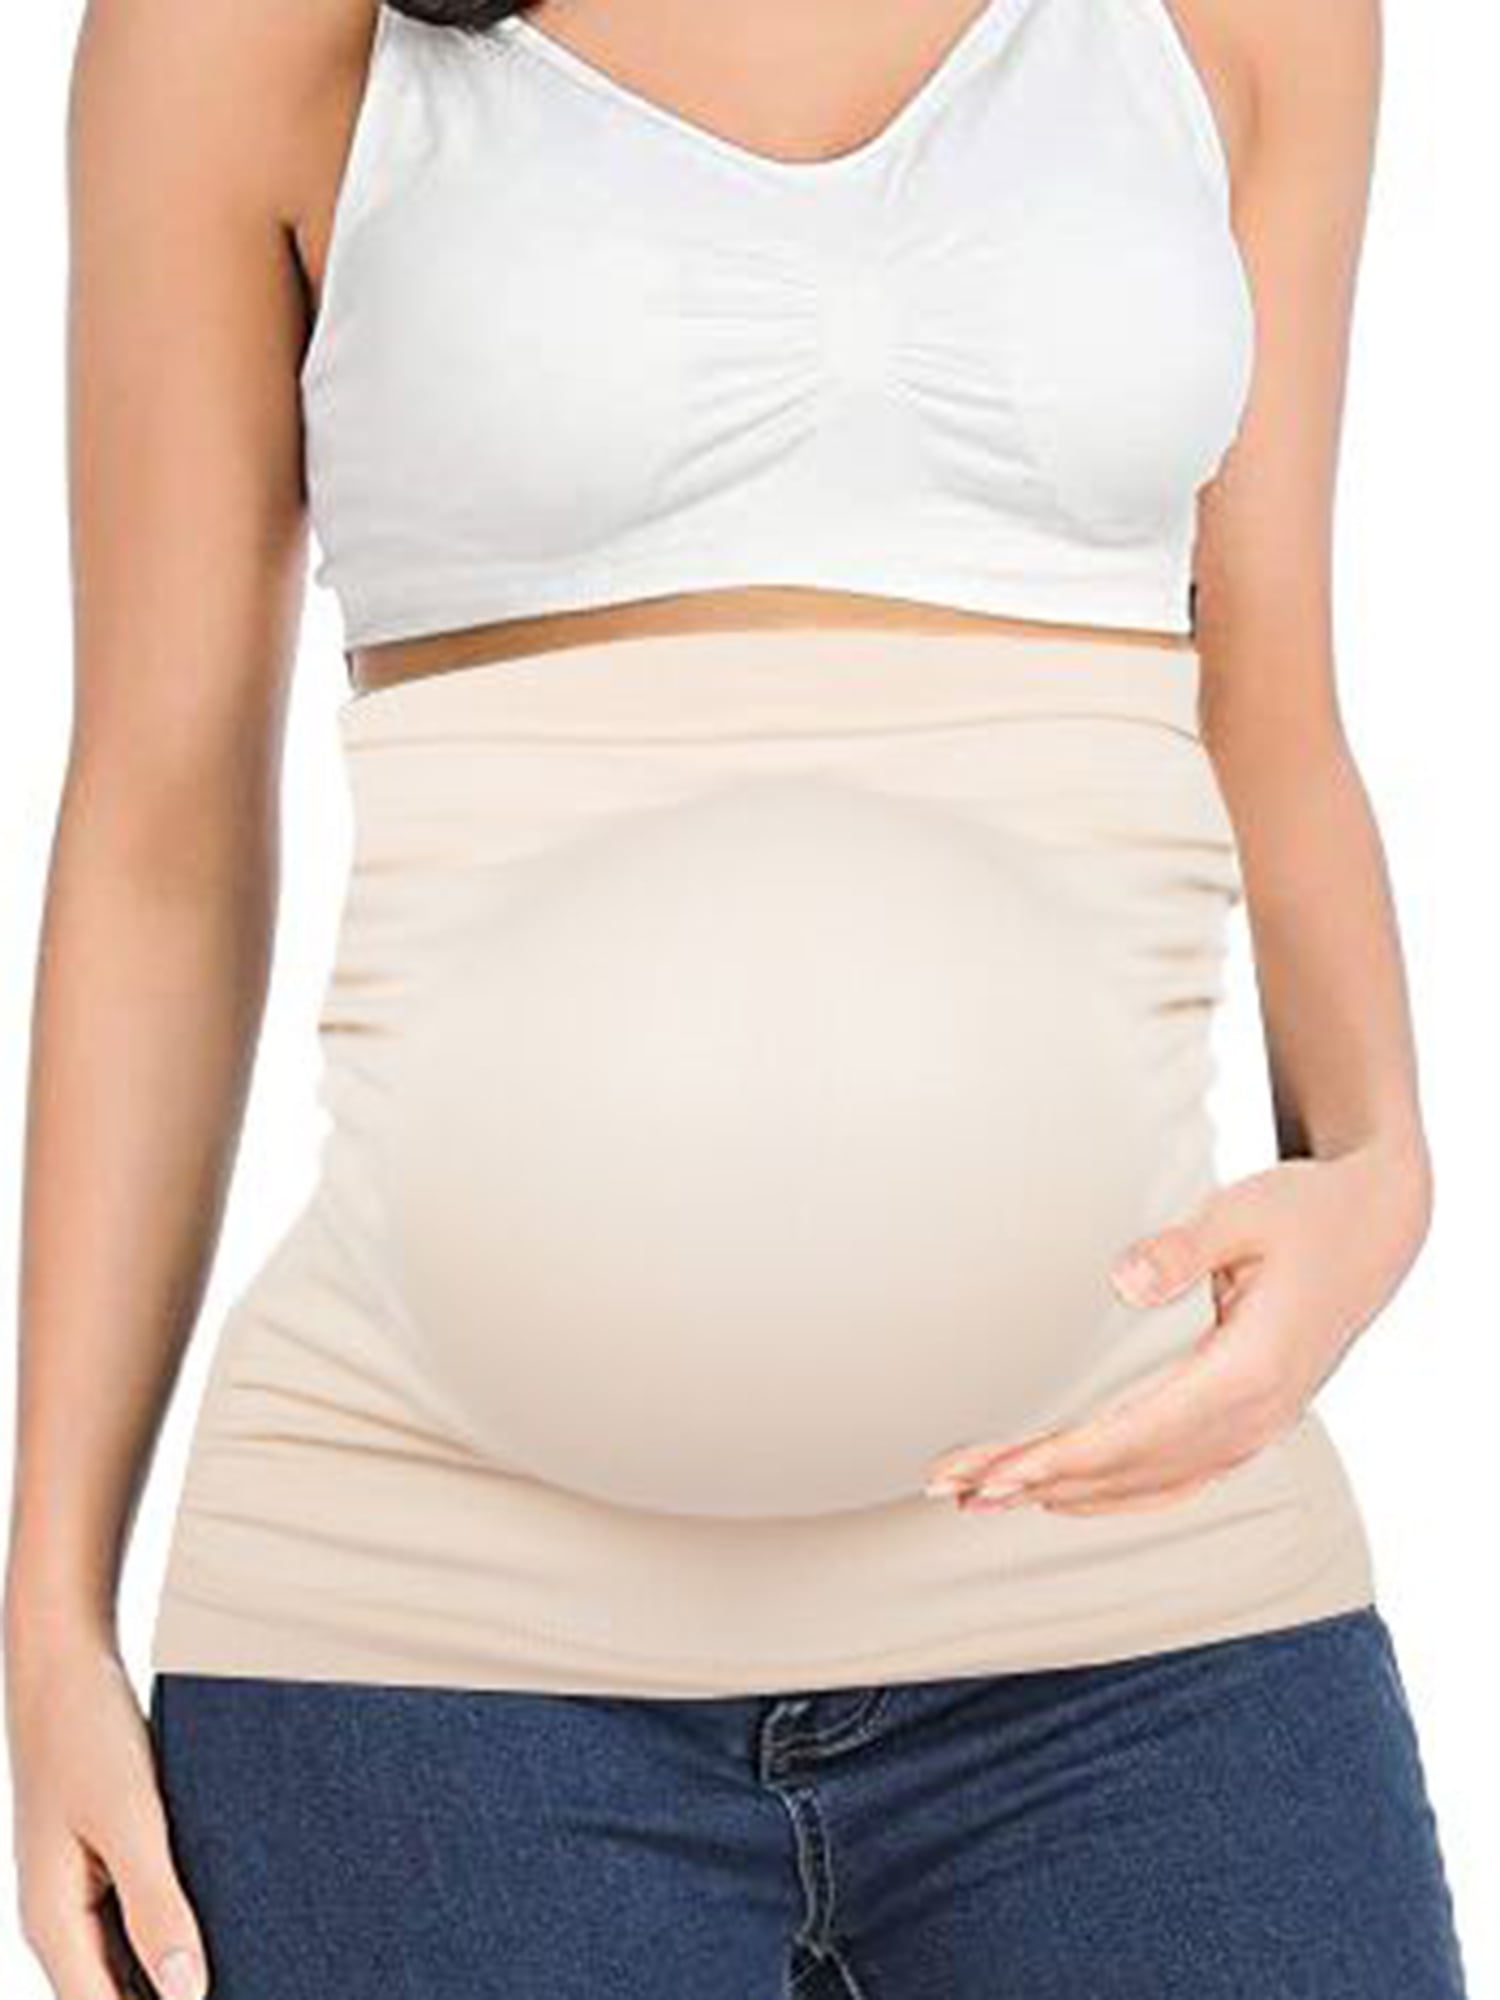 belly belt pregnancy